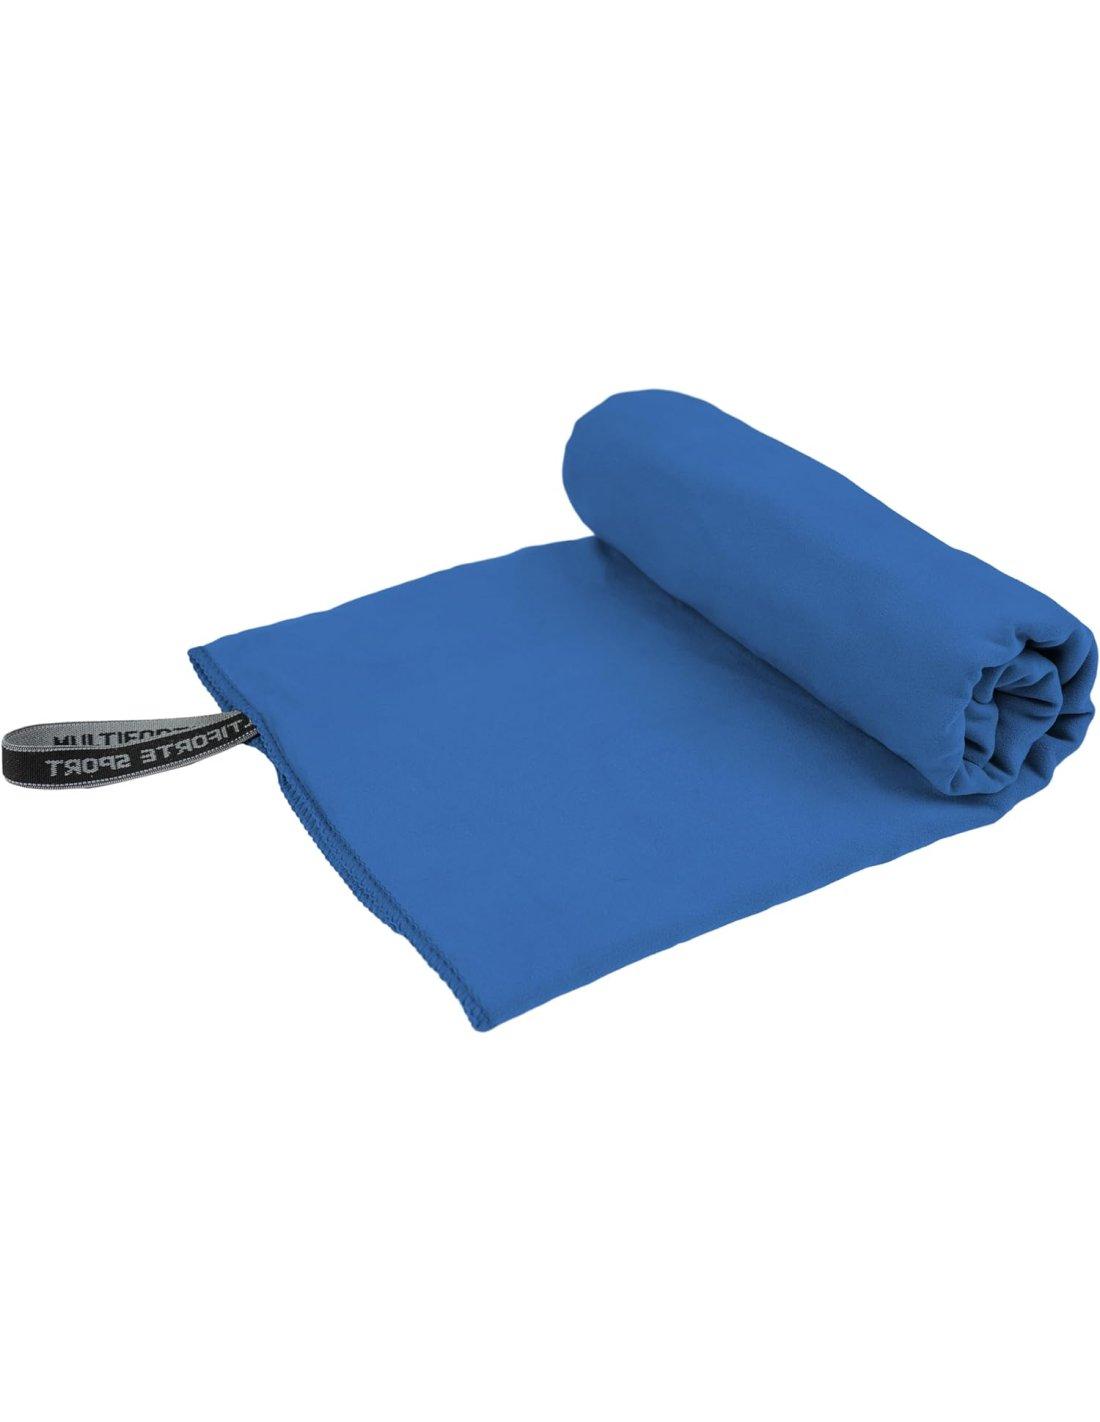 Toalla Gimnasio de Microfibra Azul - Ligera, Compacta, Absorbente, Secado  Rápido - Ideal para Gym, Viaje, Piscina, Playa